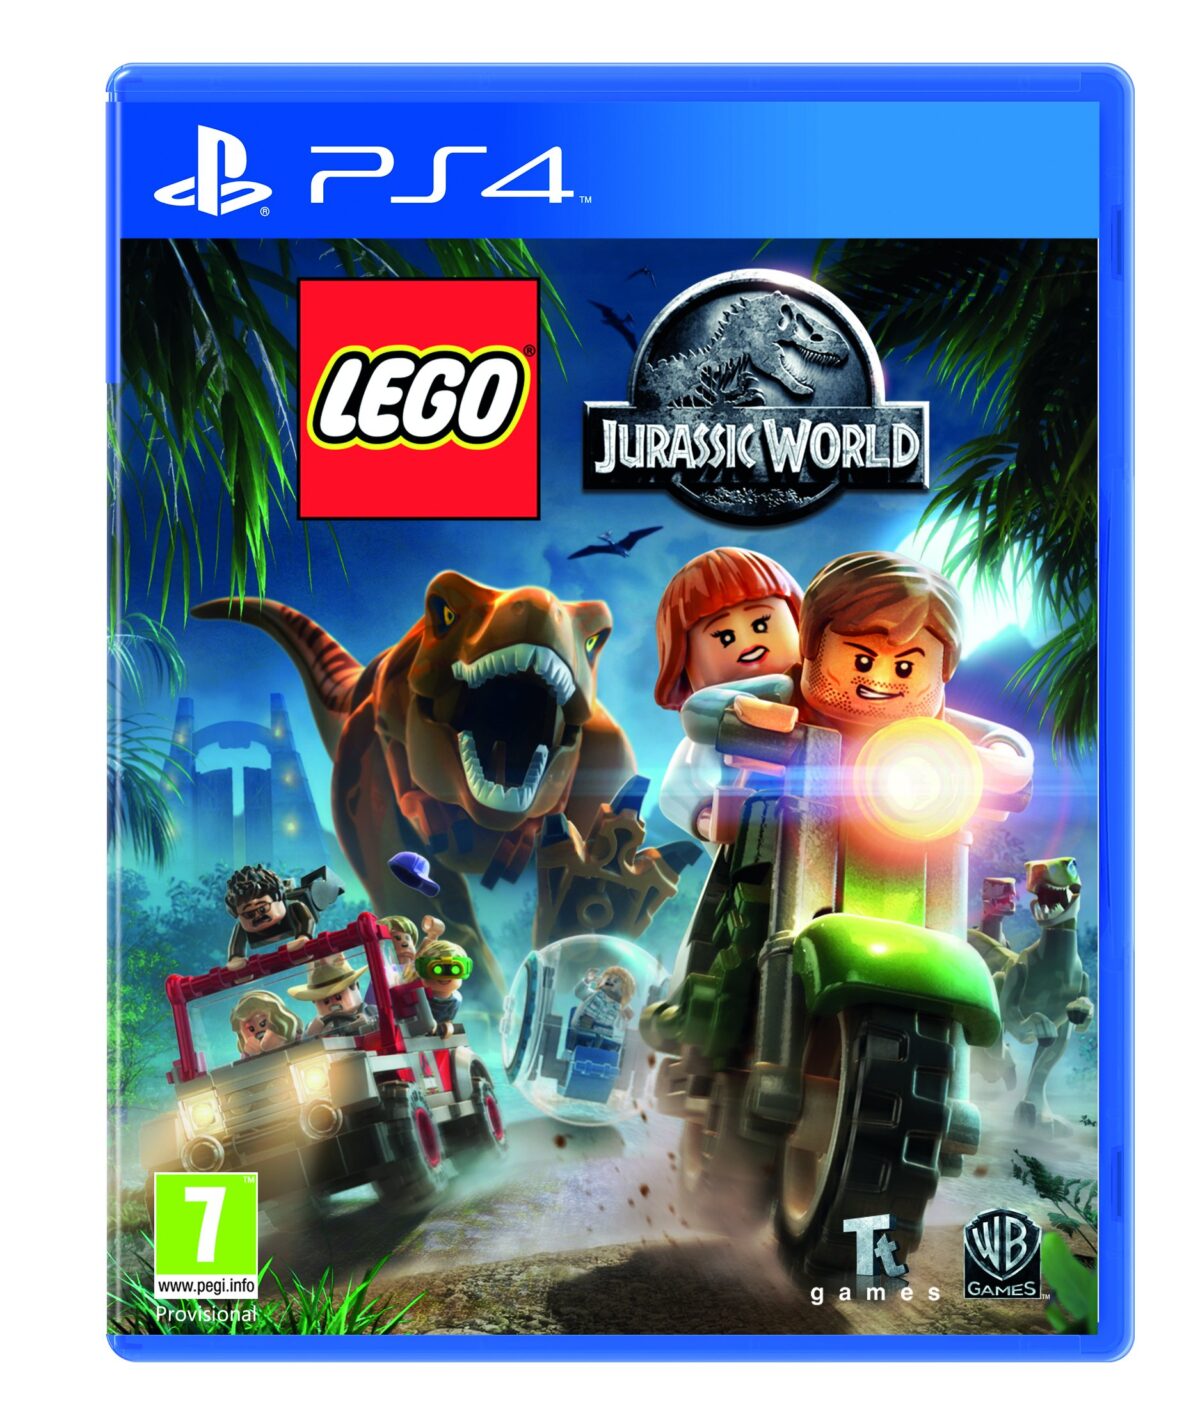 Lego: Jurassic World PS4 (New)